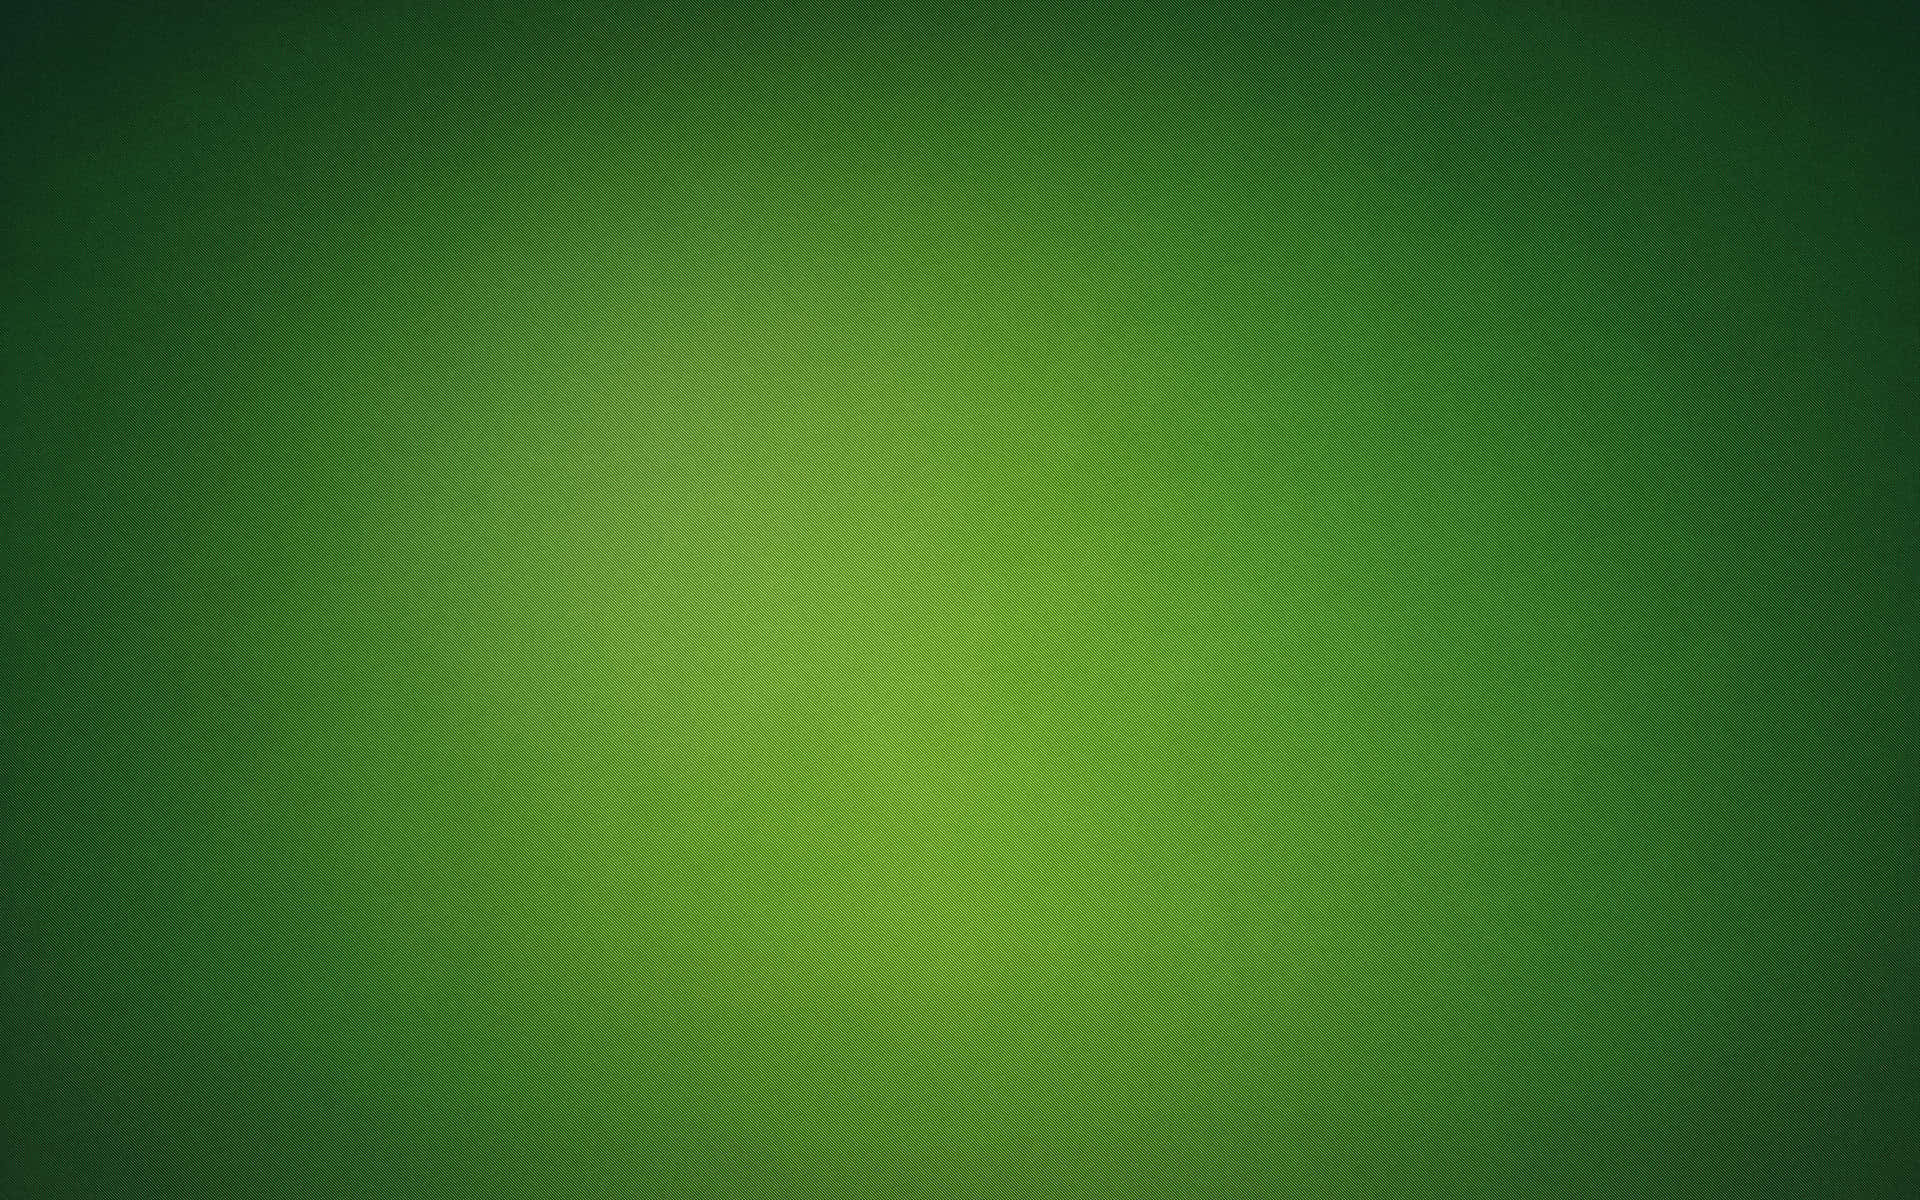 Green Background With A Dark Background